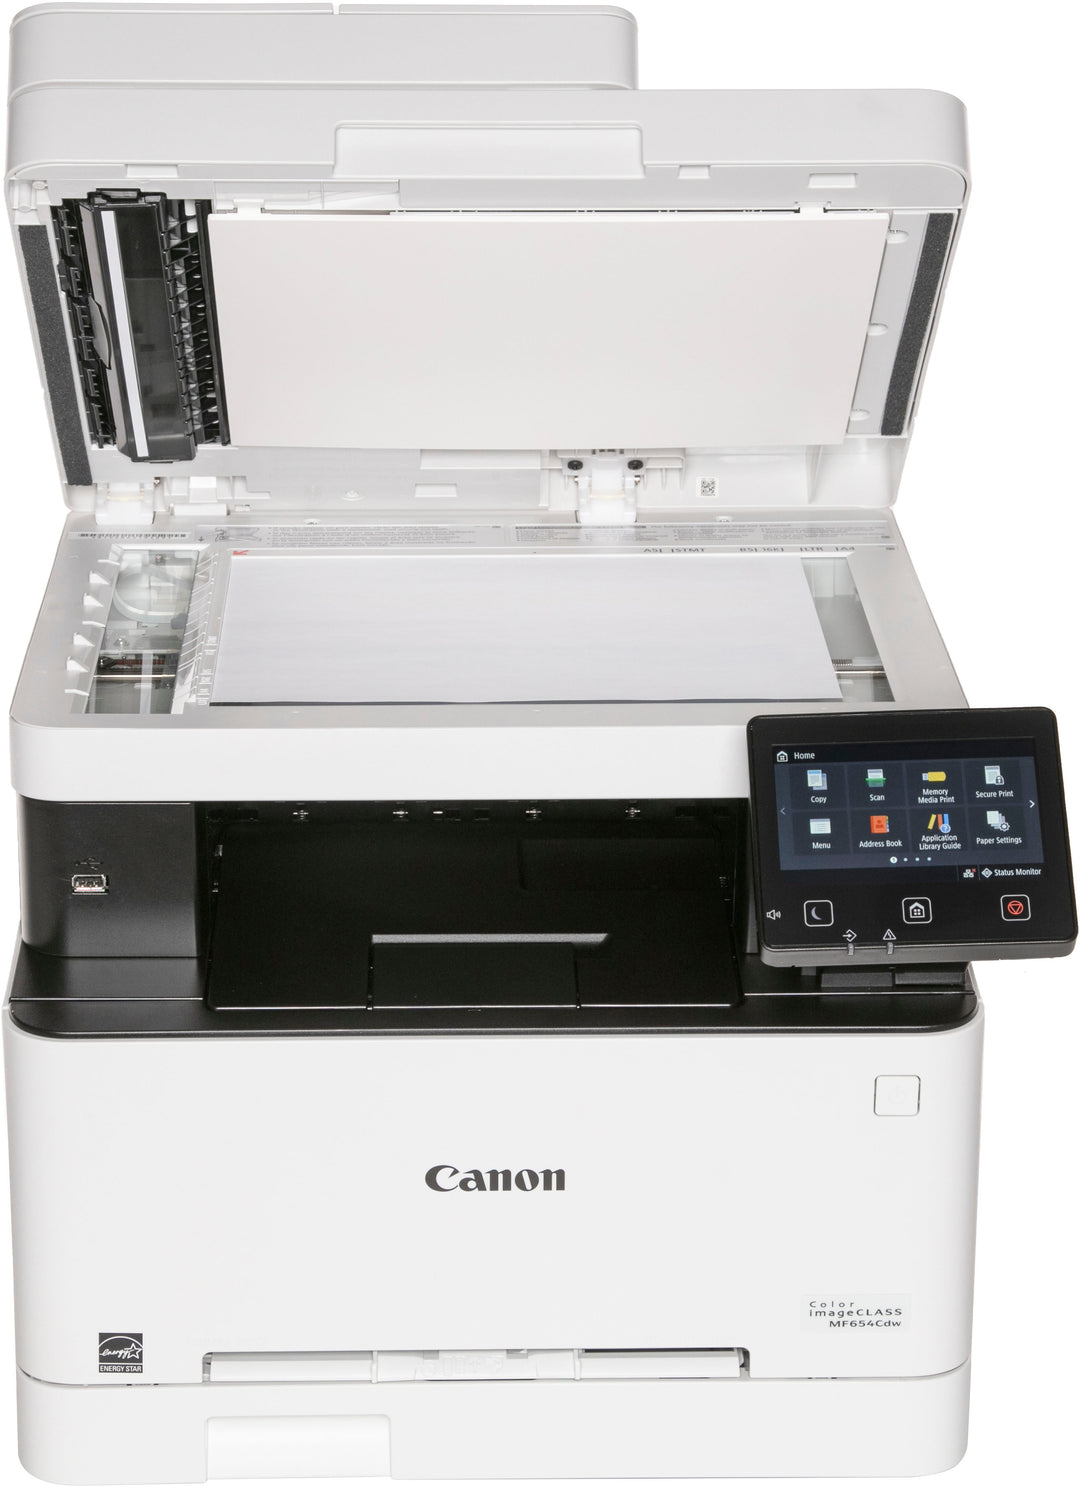 Canon - imageCLASS MF654Cdw Wireless Color All-In-One Laser Printer - White_16